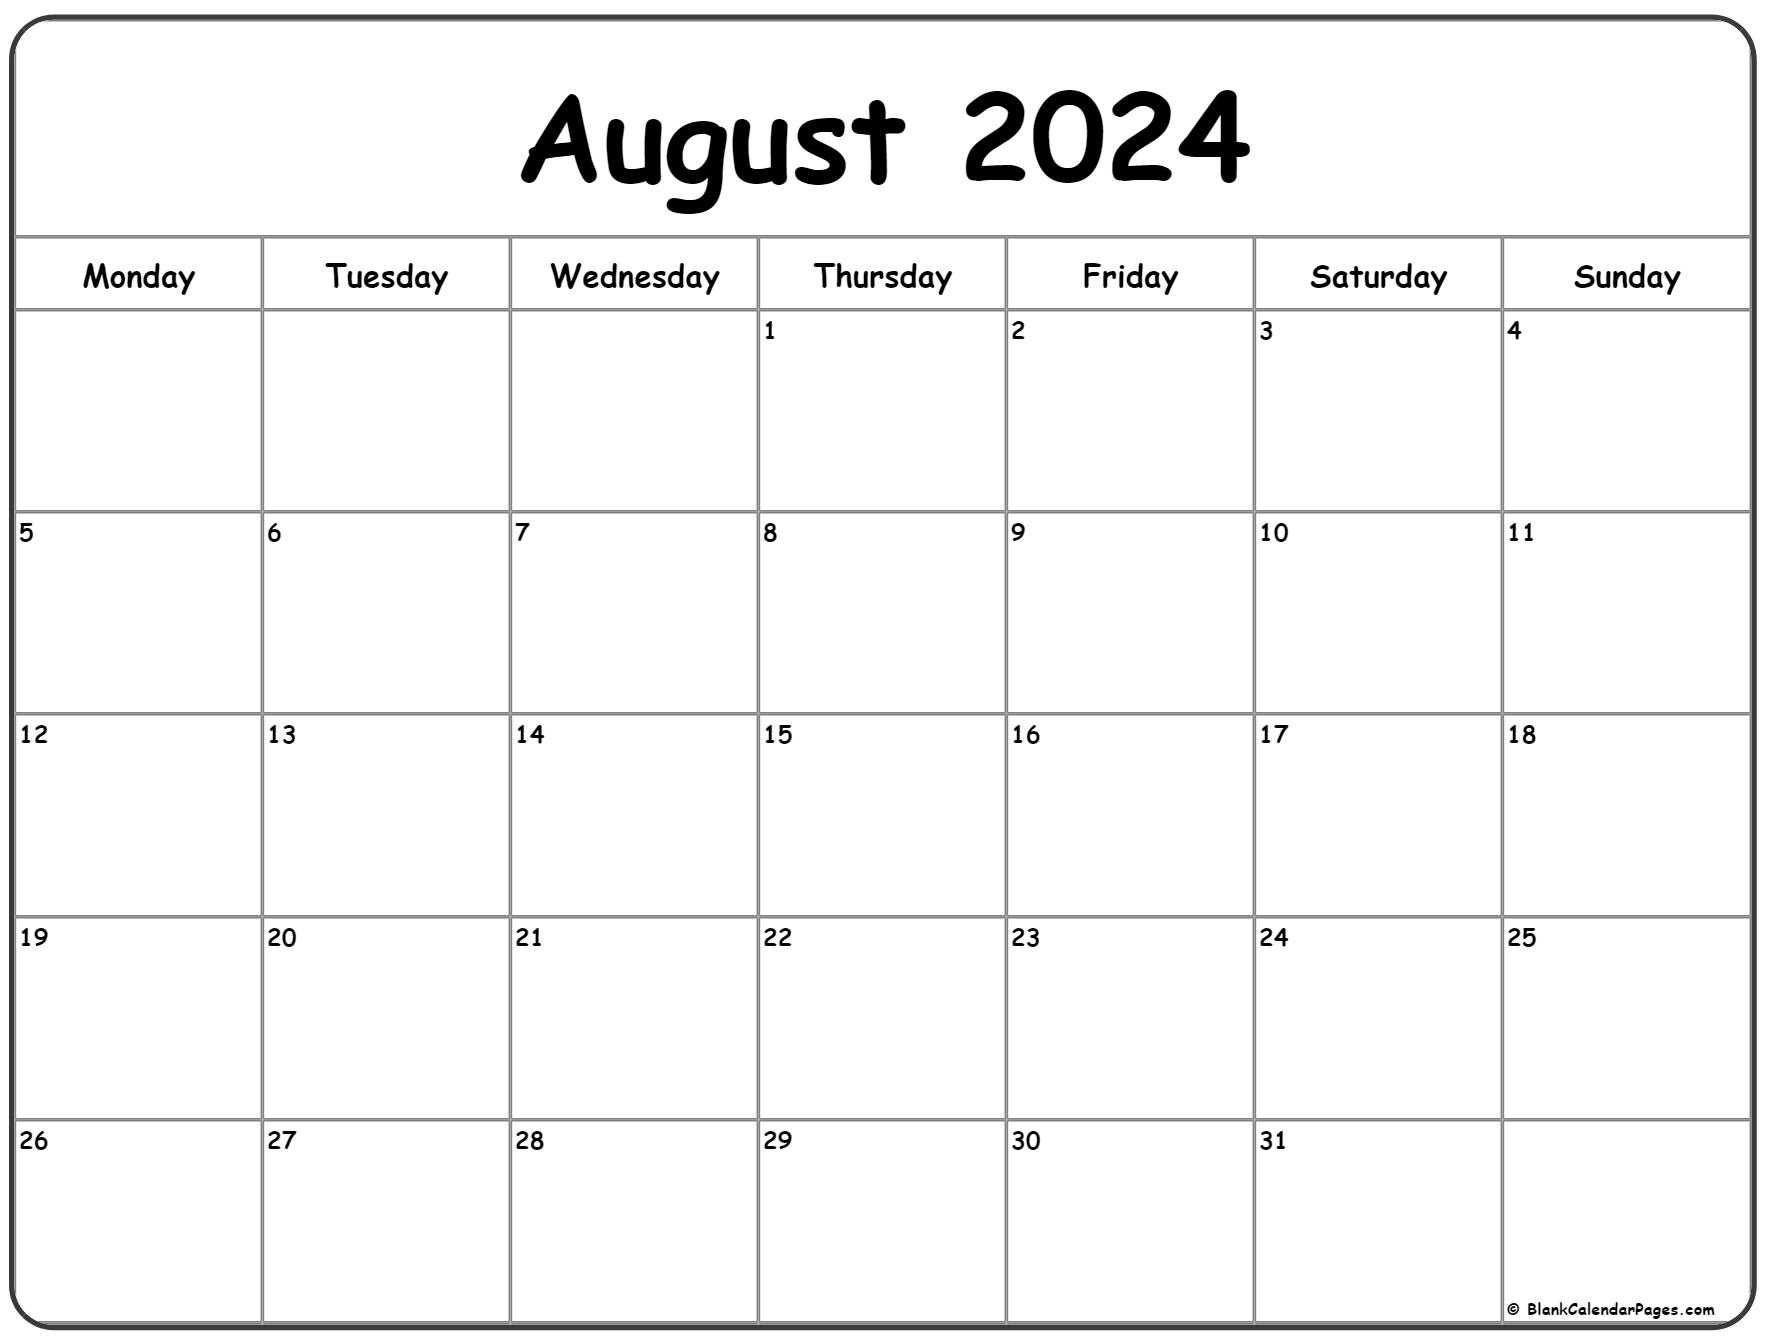 August 2024 Monday Calendar | Monday To Sunday for Aug 2024 Printable Calendar